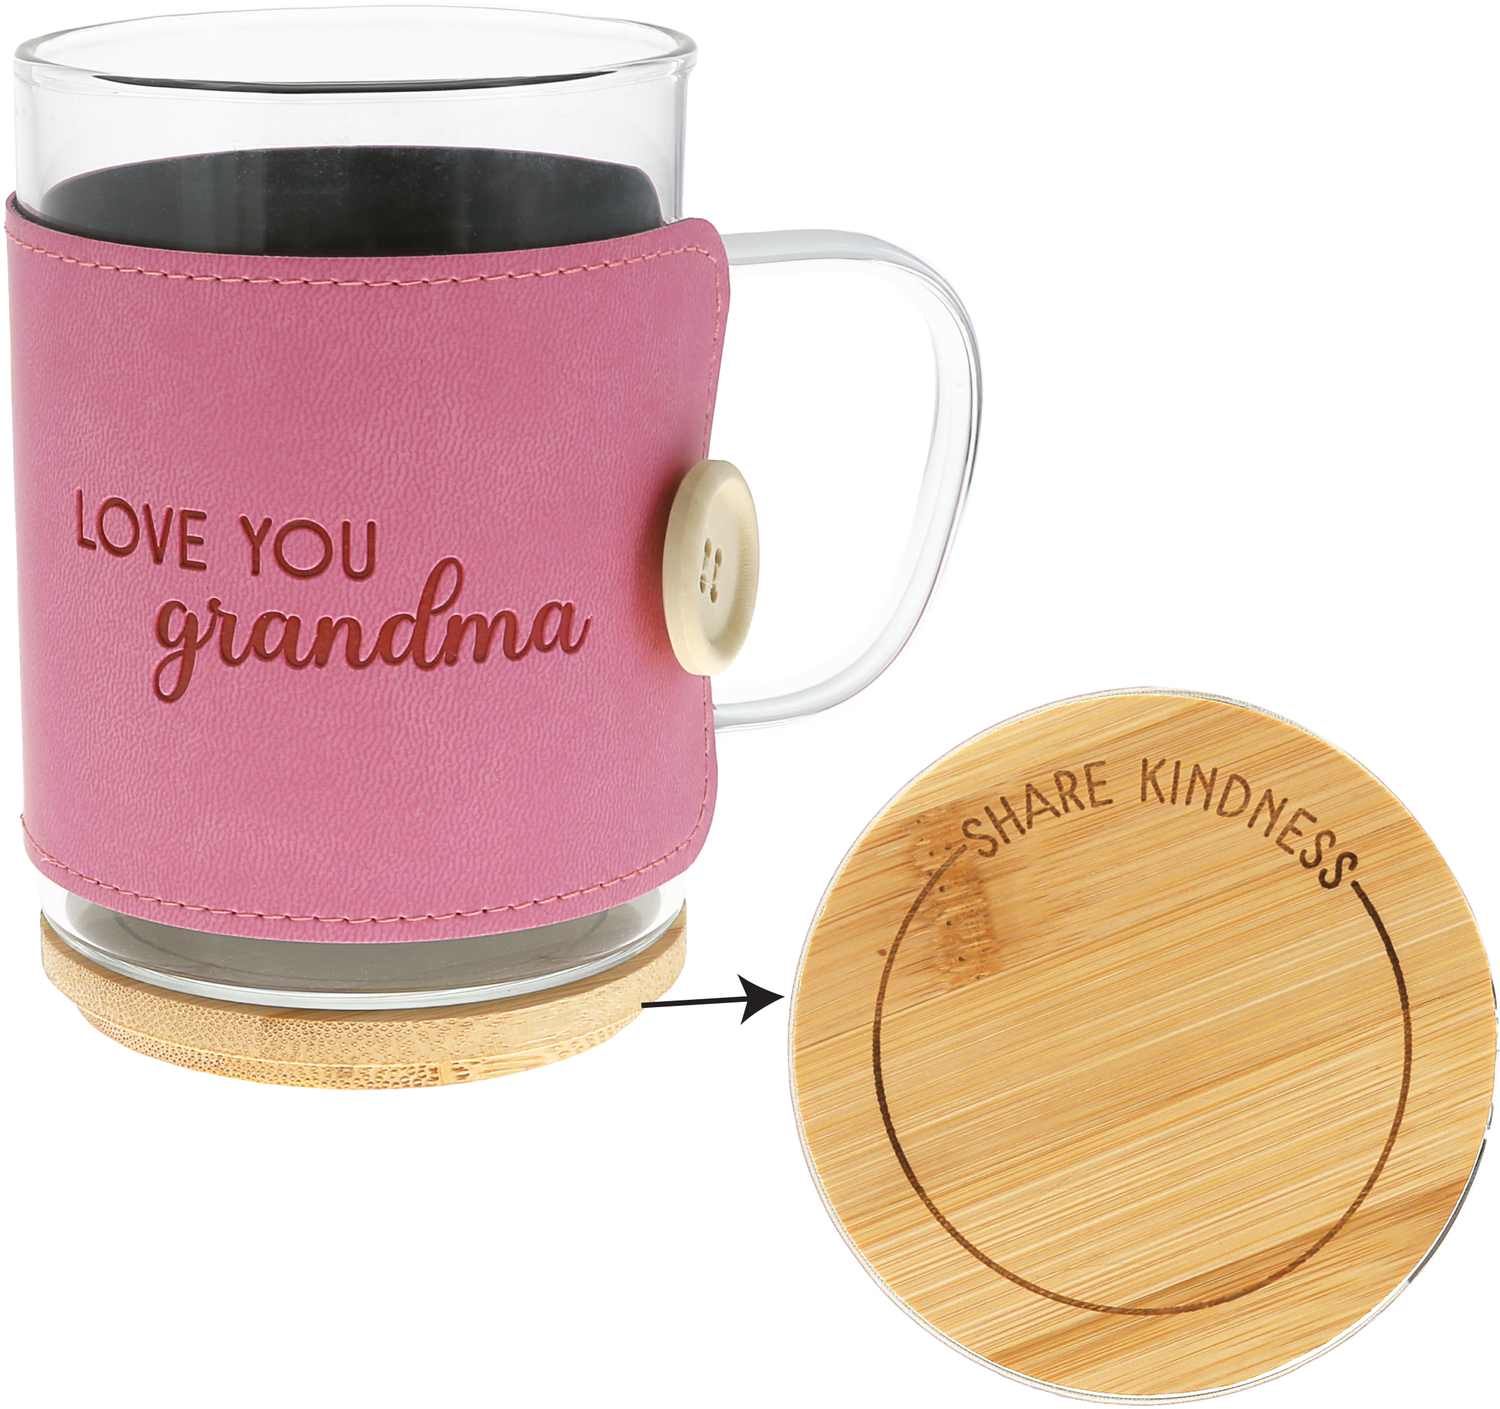 Grandma by Wrapped in Kindness - Grandma - 16 oz Wrapped Glass Mug with Coaster Lid